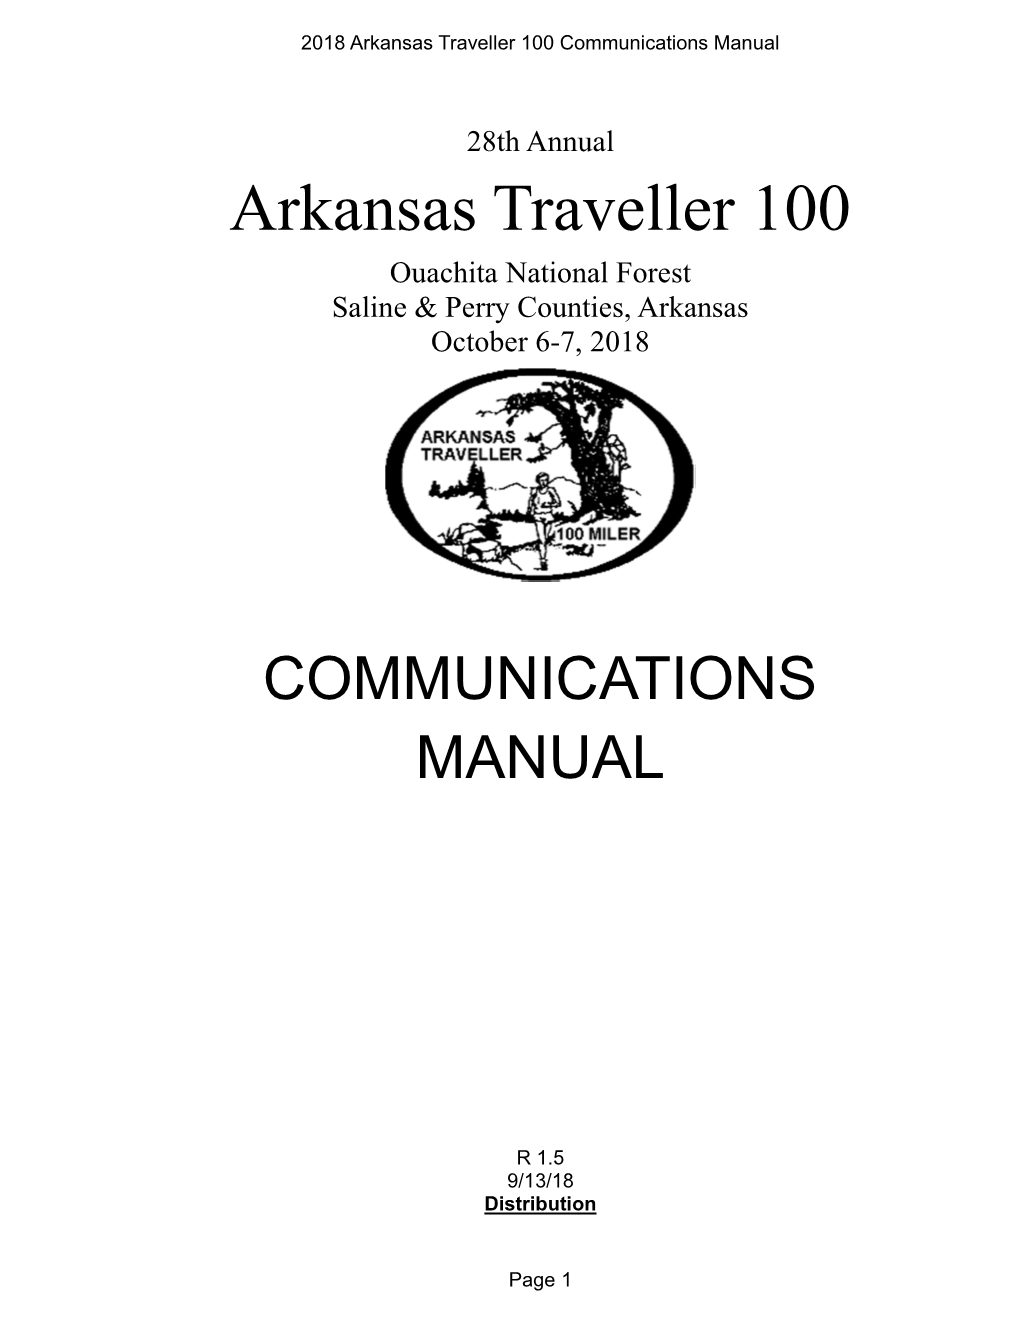 Arkansas Traveller 100 Communications Manual